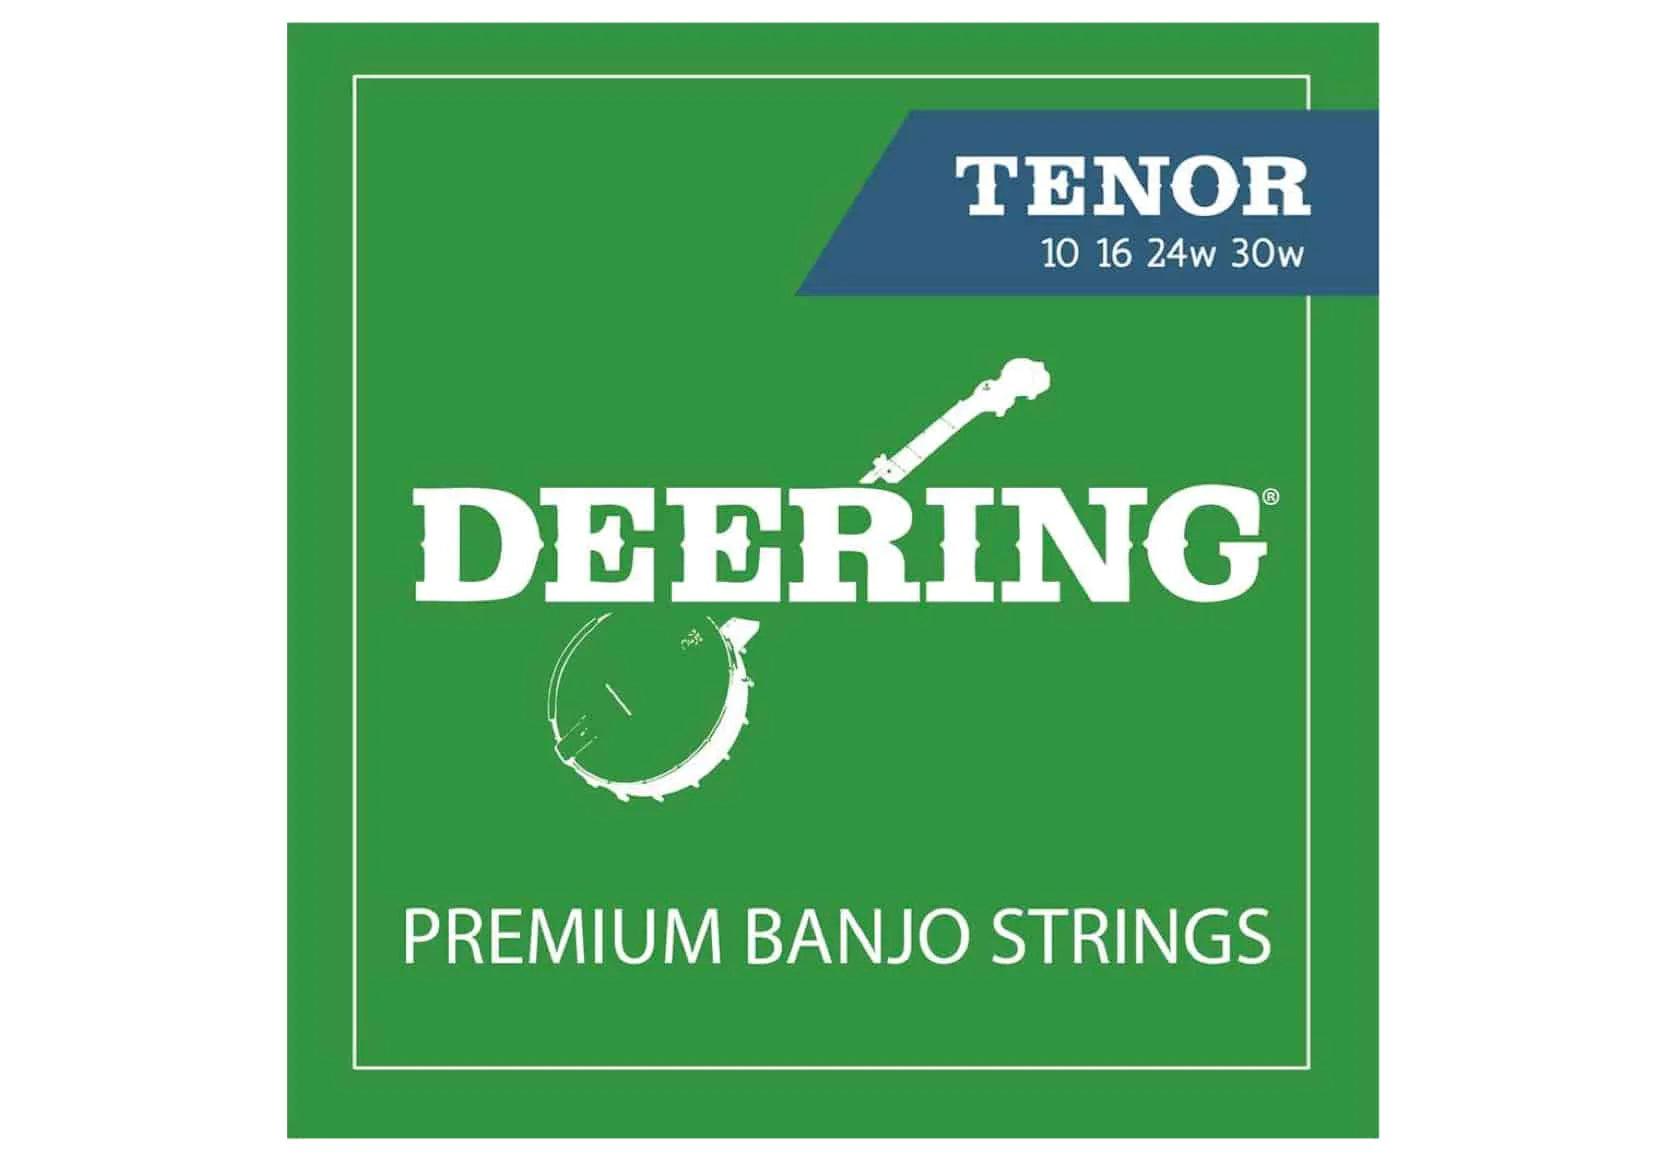 Deering Banjo Strings - Tenor - 10 16 24W 30W - Strings - Banjo by Deering at Muso's Stuff